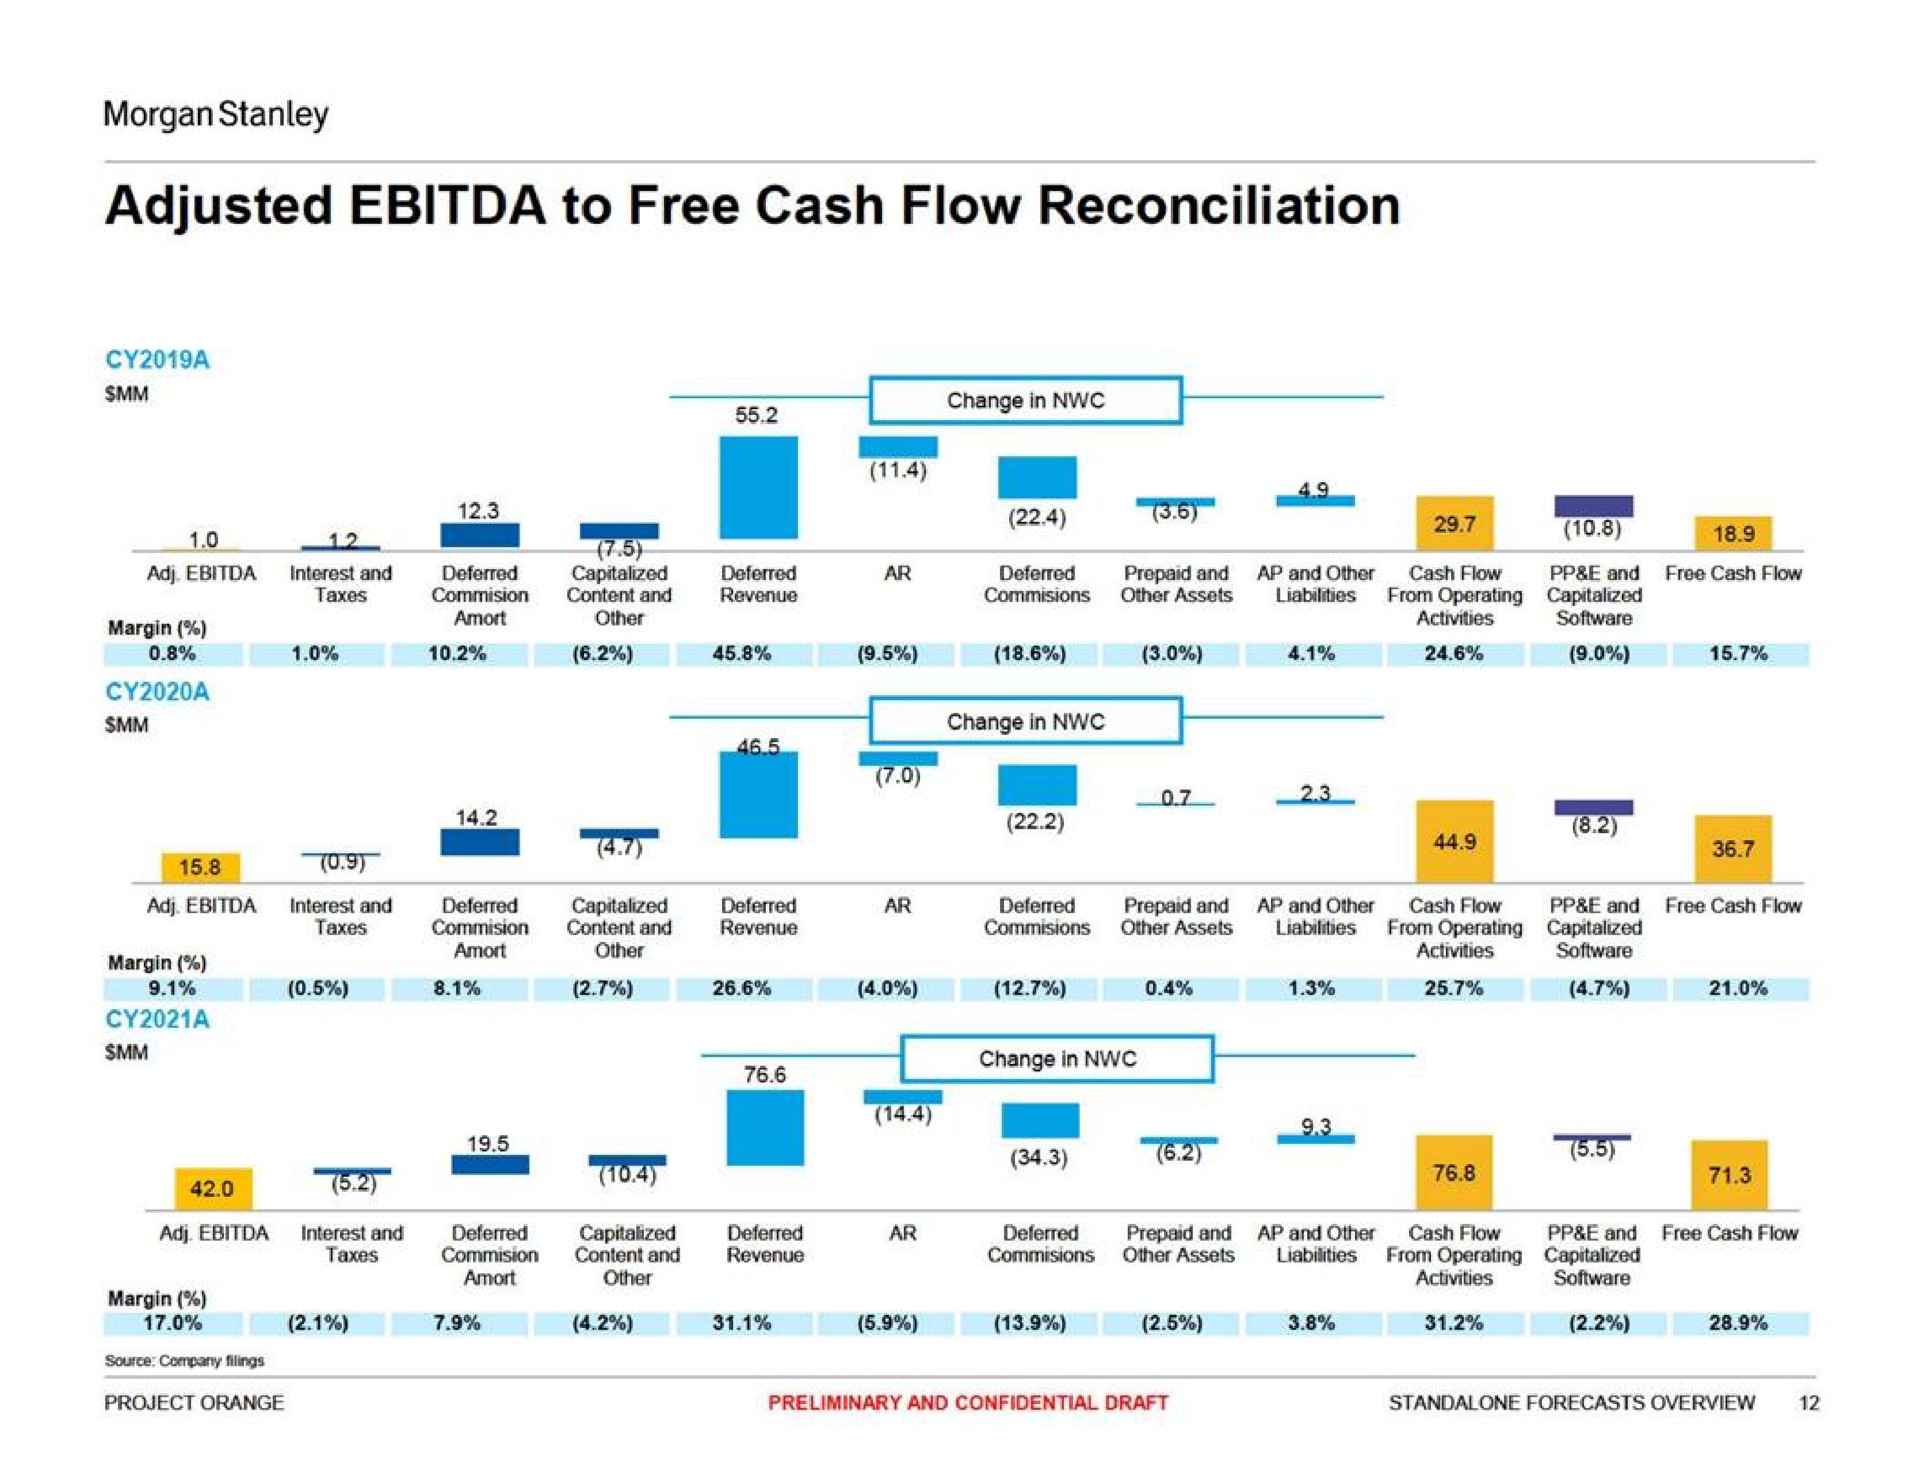 adjusted to free cash flow reconciliation | Morgan Stanley